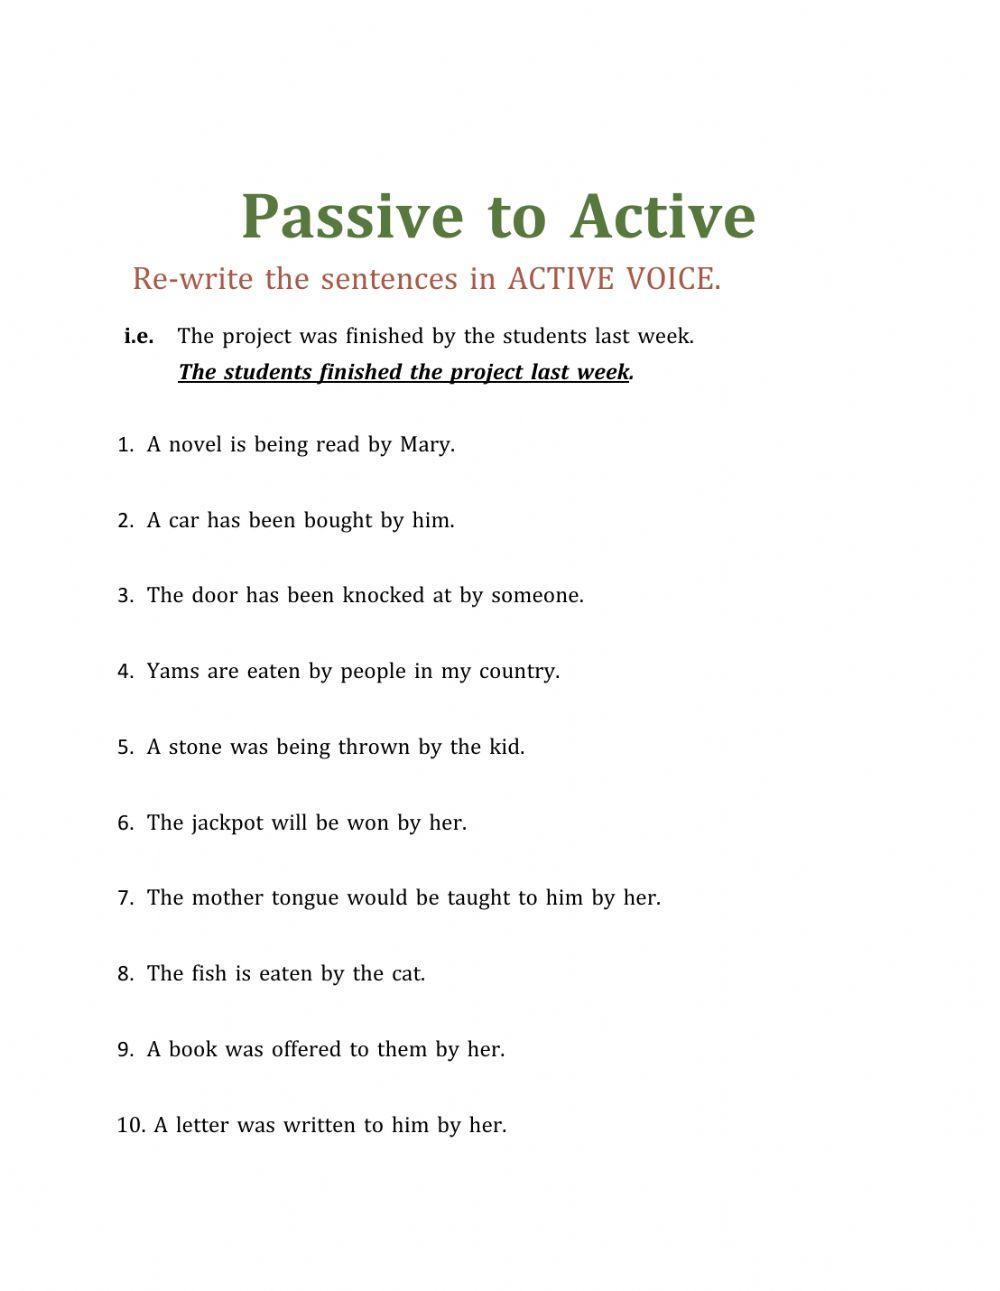 Passive Voice to Active Voice